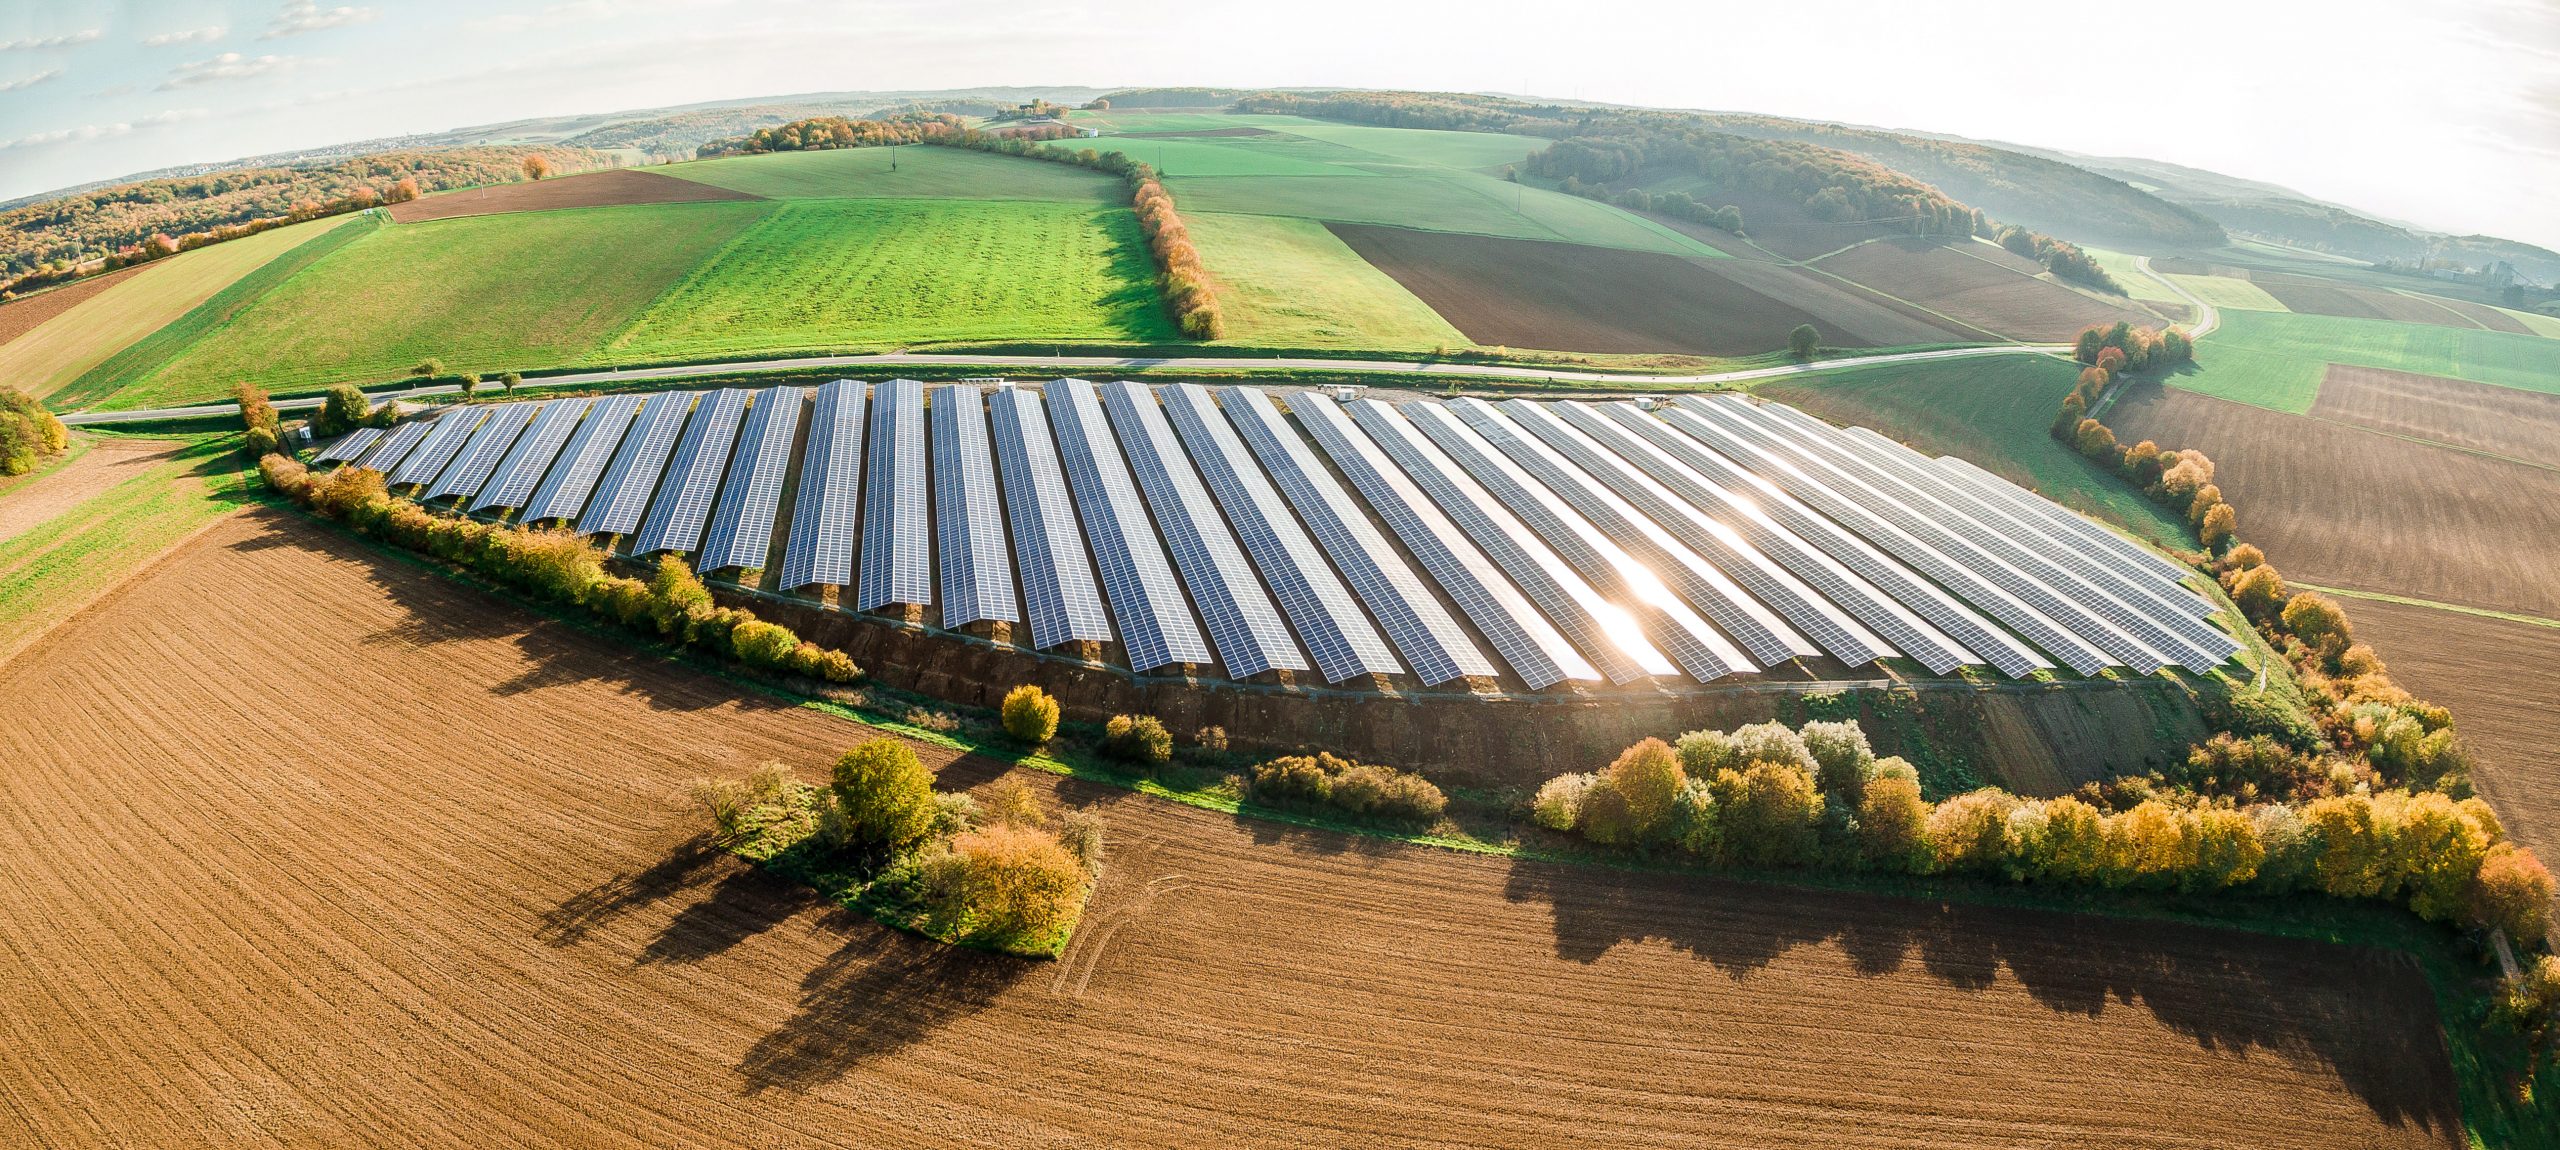 Solarpark Photovoltaik Freifläche Würzburg